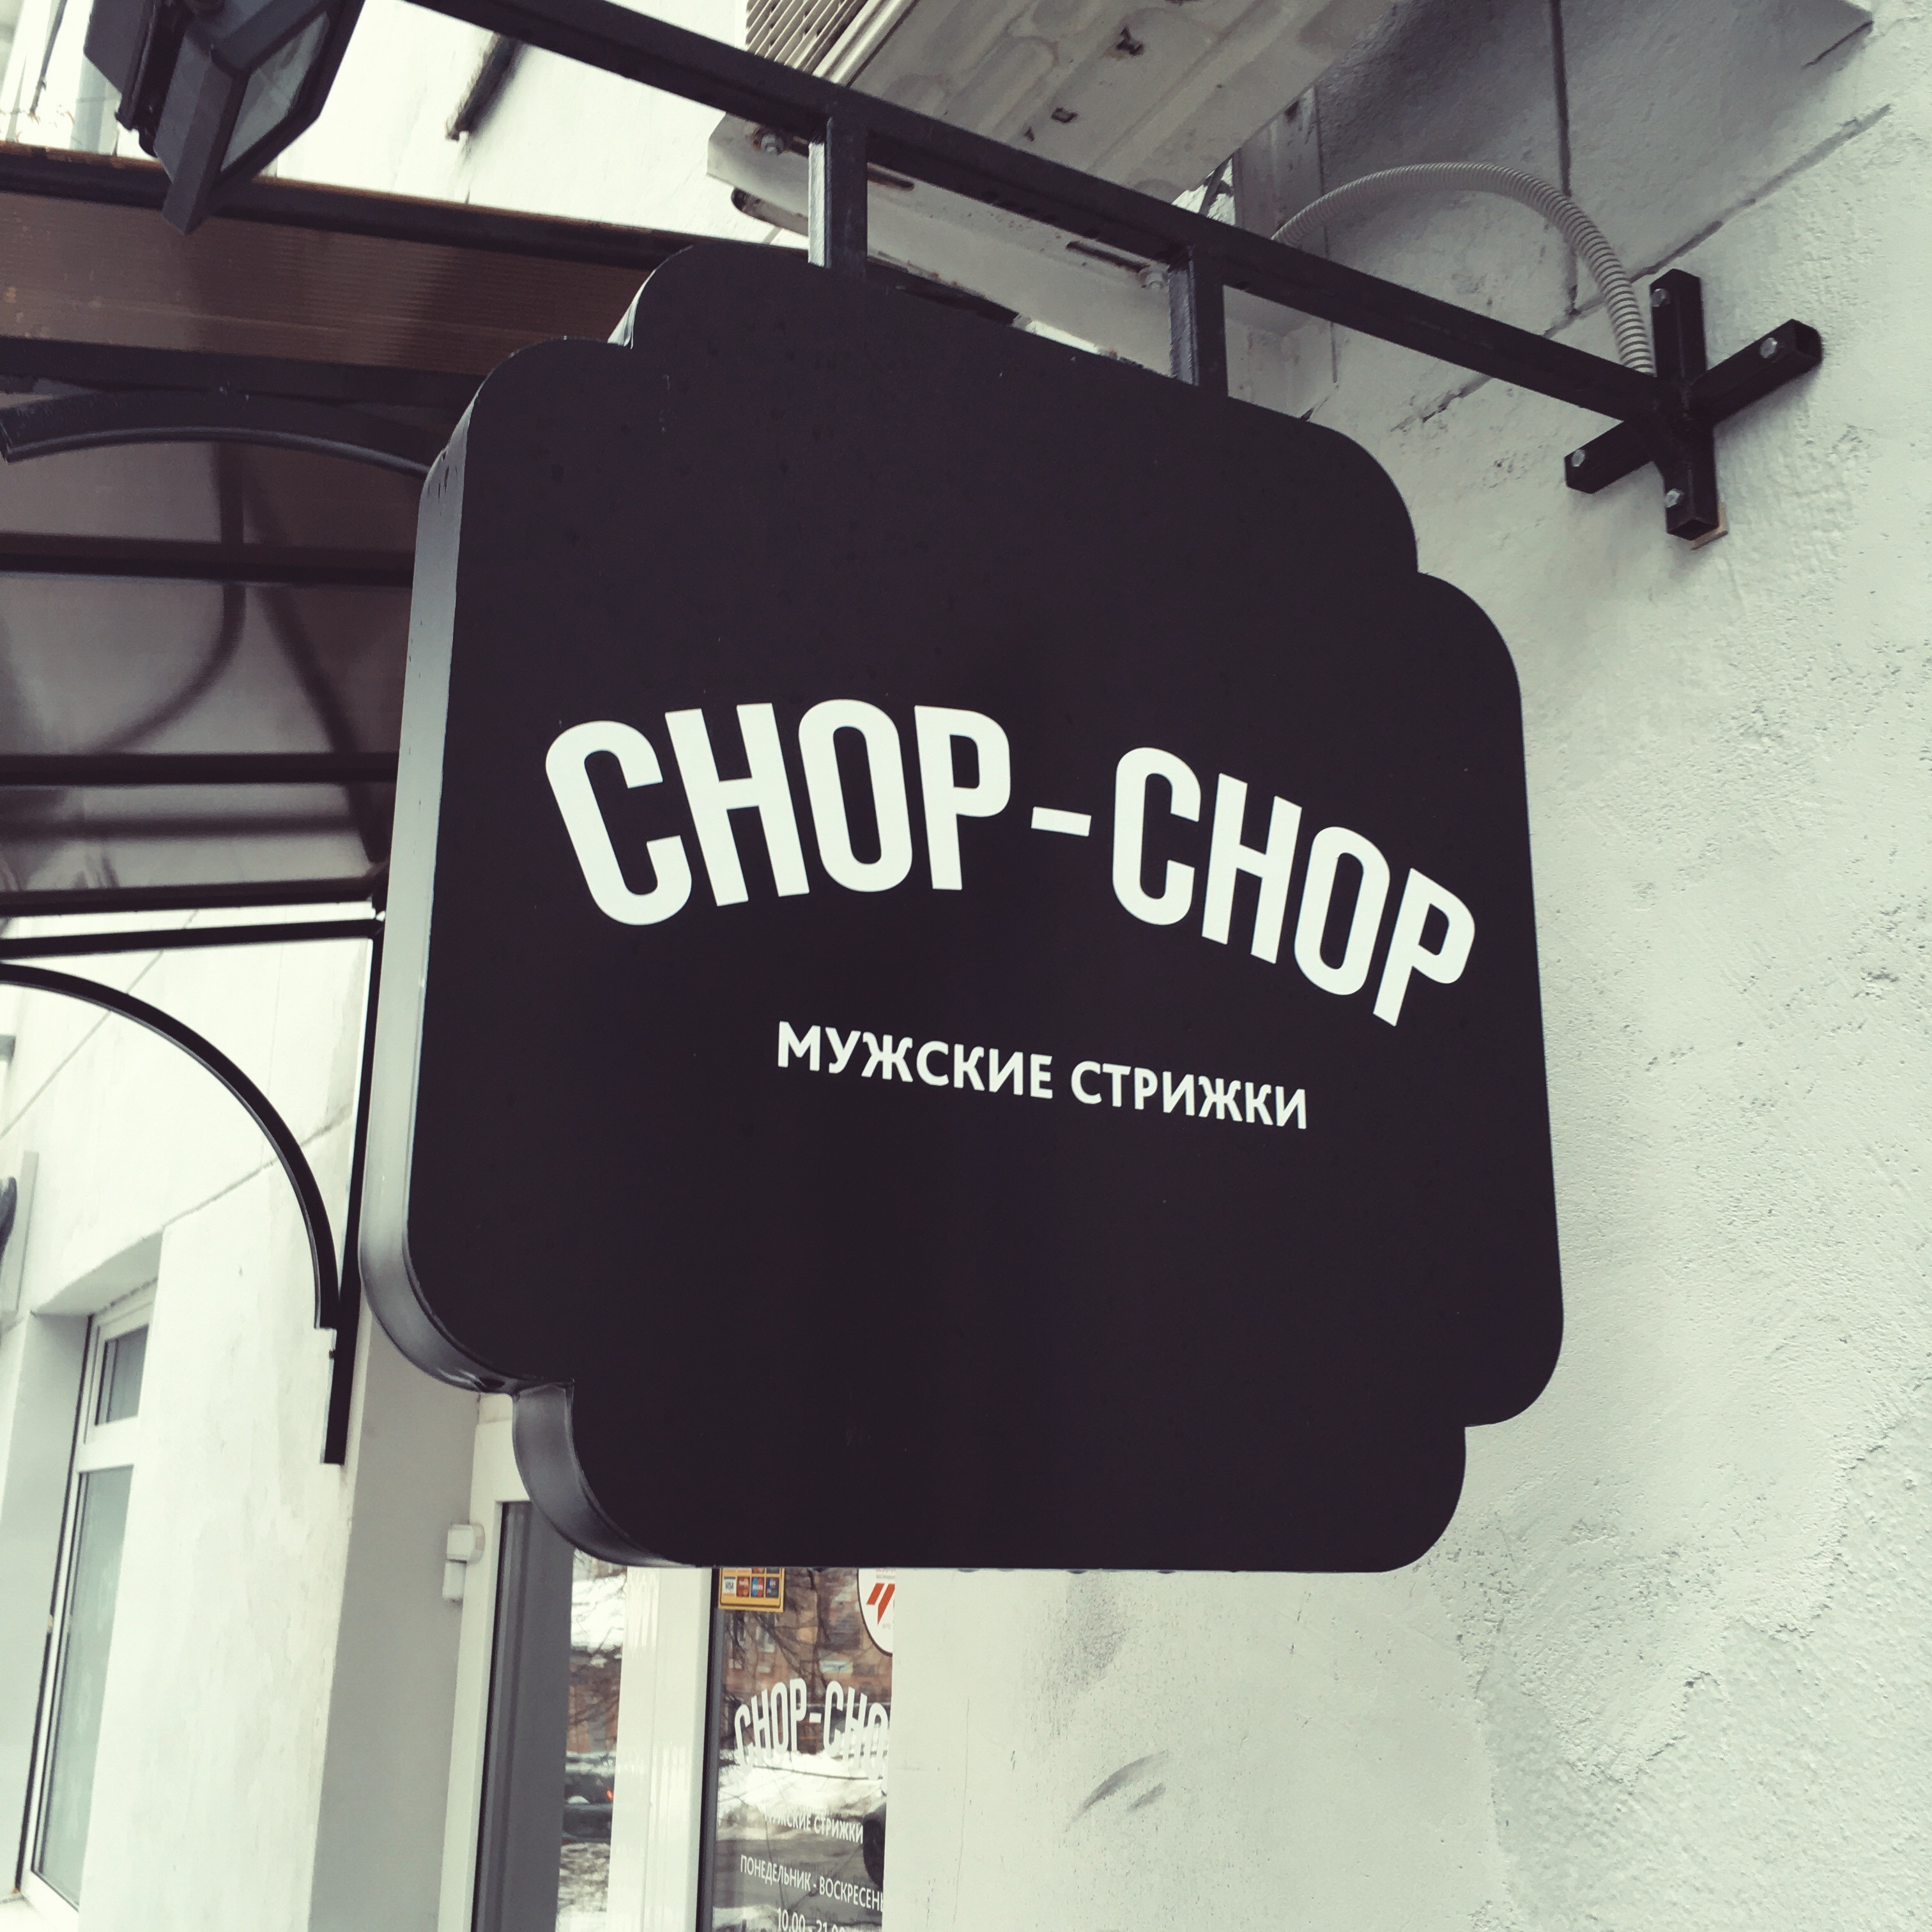 Чоп чоп белгород. Chop Chop логотип. Стрижка Чоп Чоп мужская. Chop Chop Столешников. Chop Chop барбершоп logo.